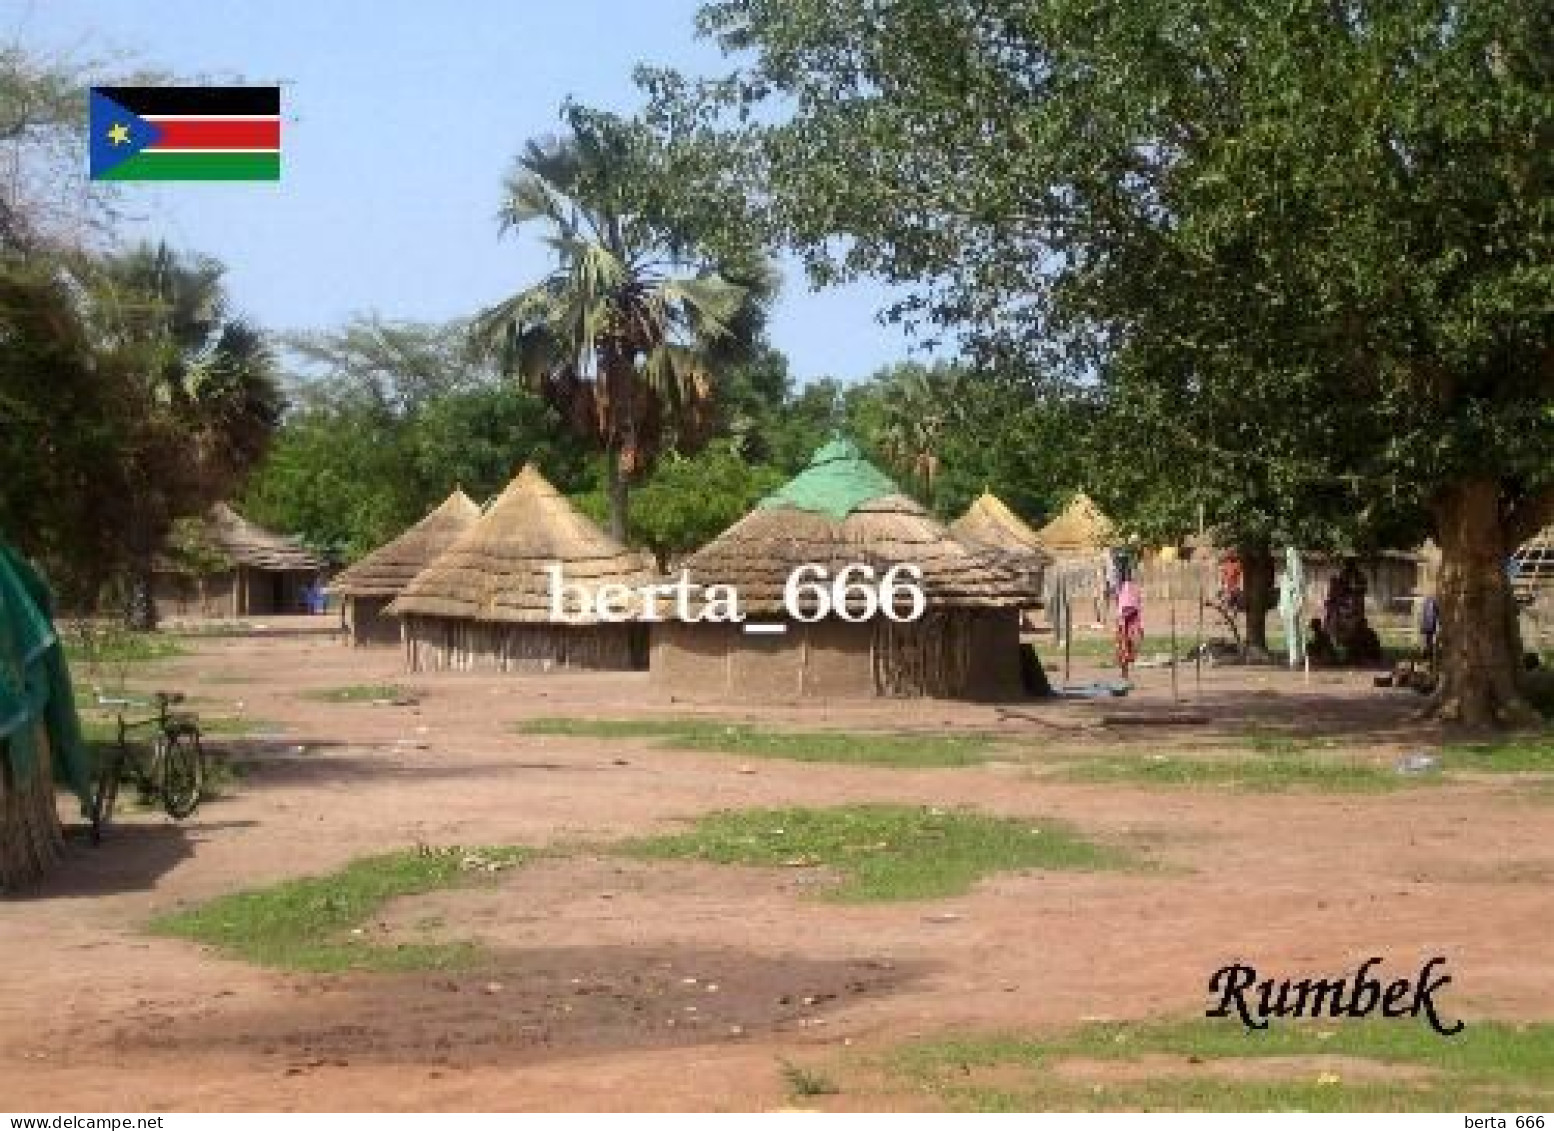 South Sudan Rumbek Huts New Postcard - Soudan